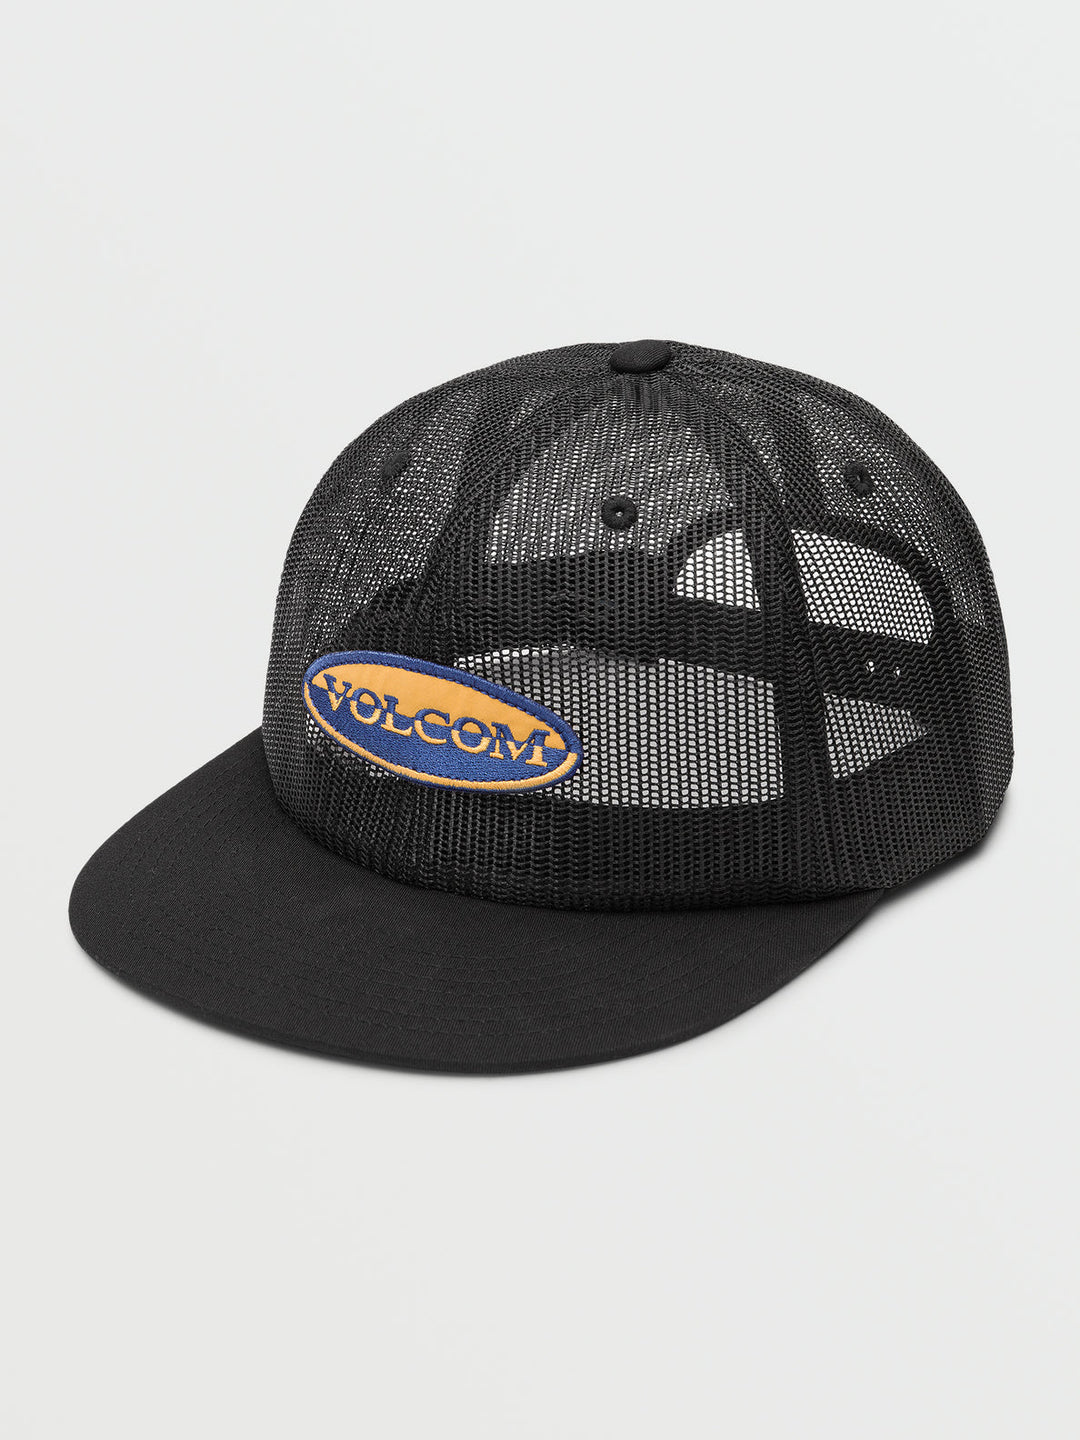 Volcom Meshington Trucker Hat - Black - Sun Diego Boardshop